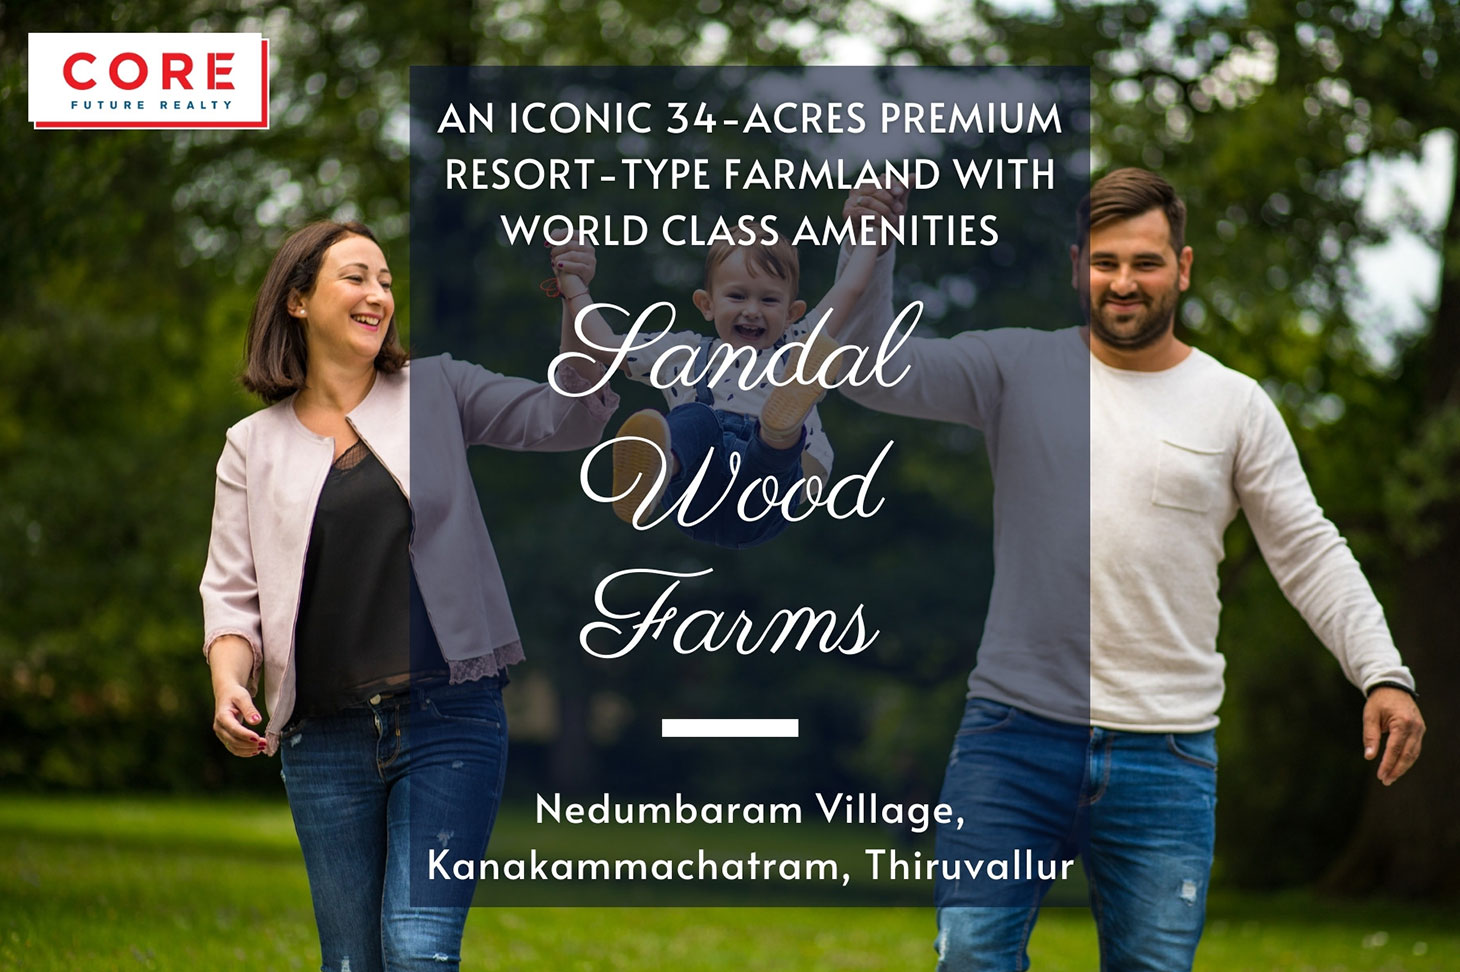 Sandal-Wood-Farms-feature